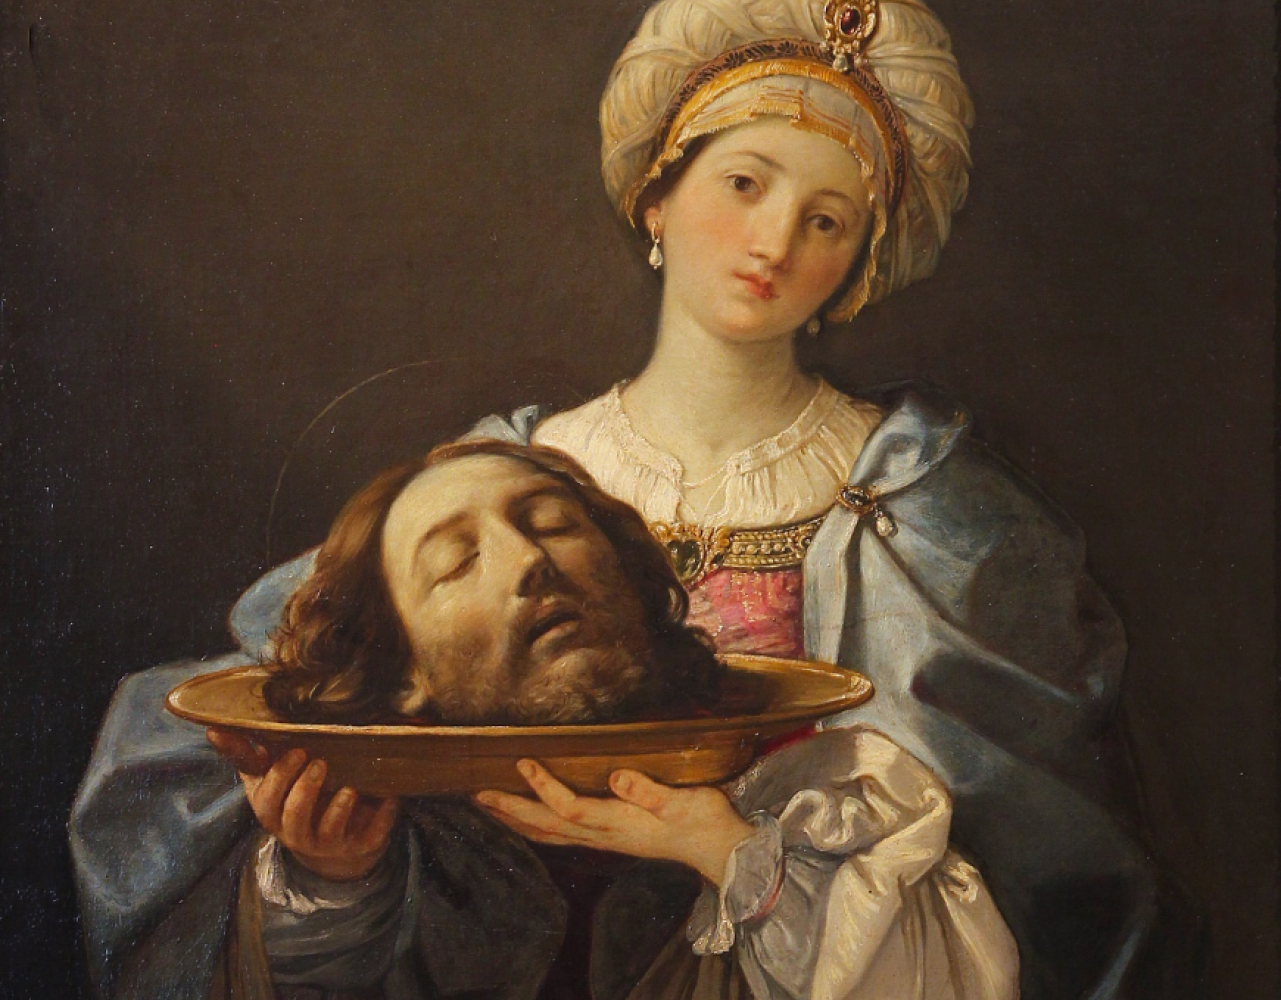 Guido Reni "Salome mit dem Haupt Johannes des Täufers", circa 1638/39